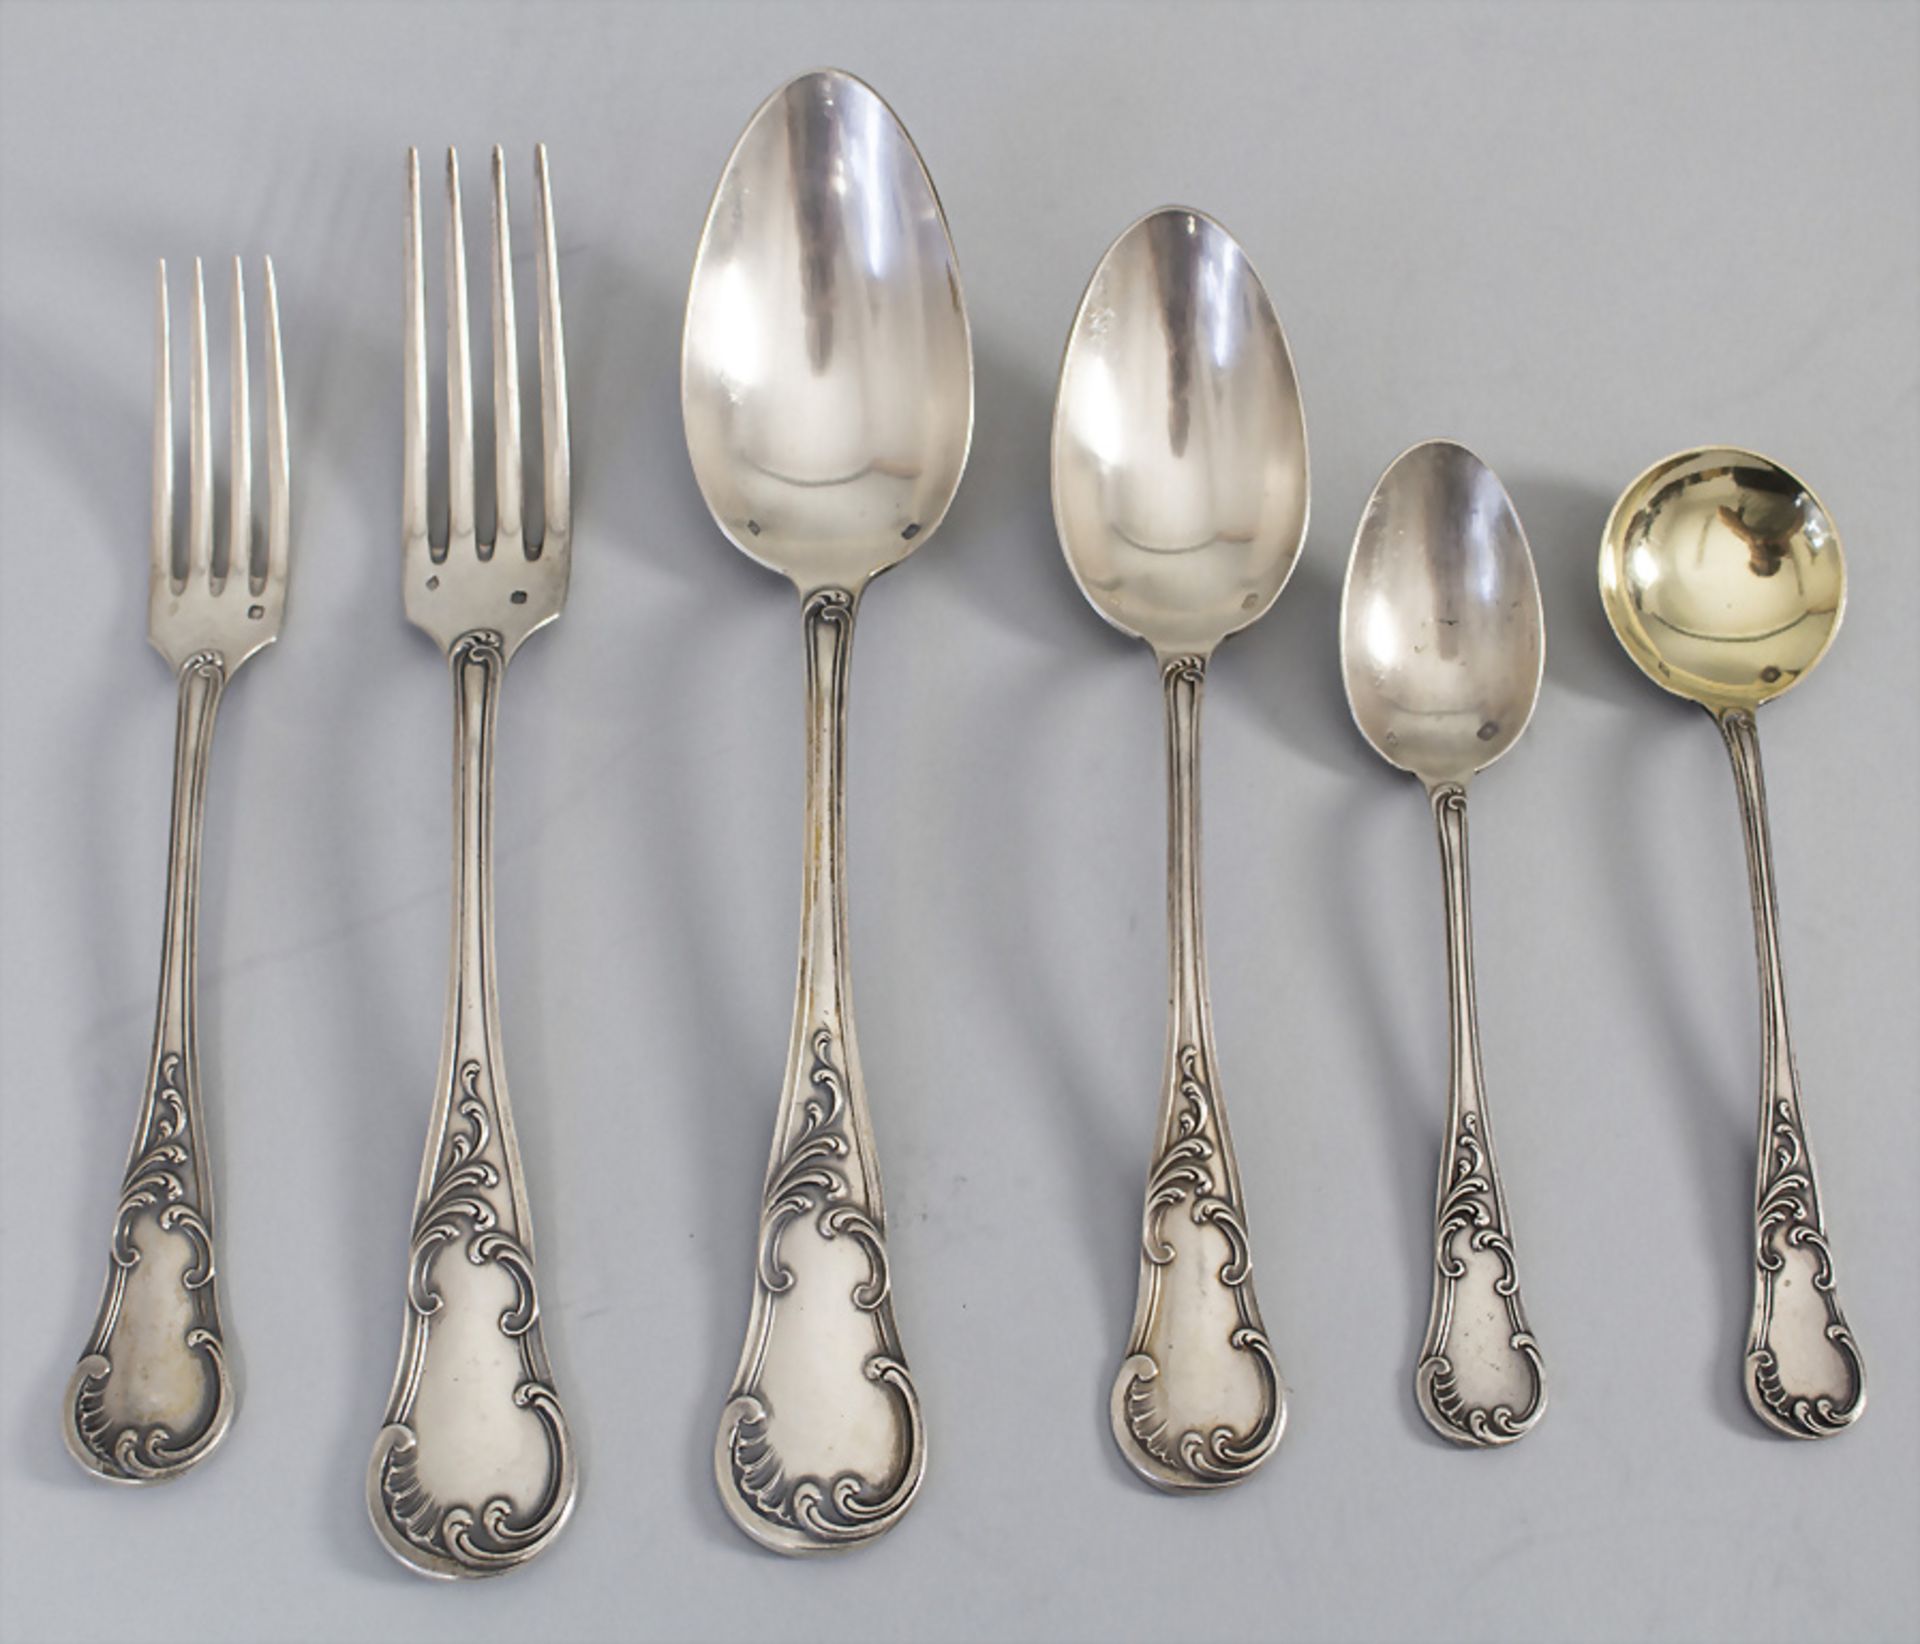 Silberbesteck 86 tlg. / A set of 86 silver cutlery, Pierre Queille, Paris, um 1860 - Bild 2 aus 5